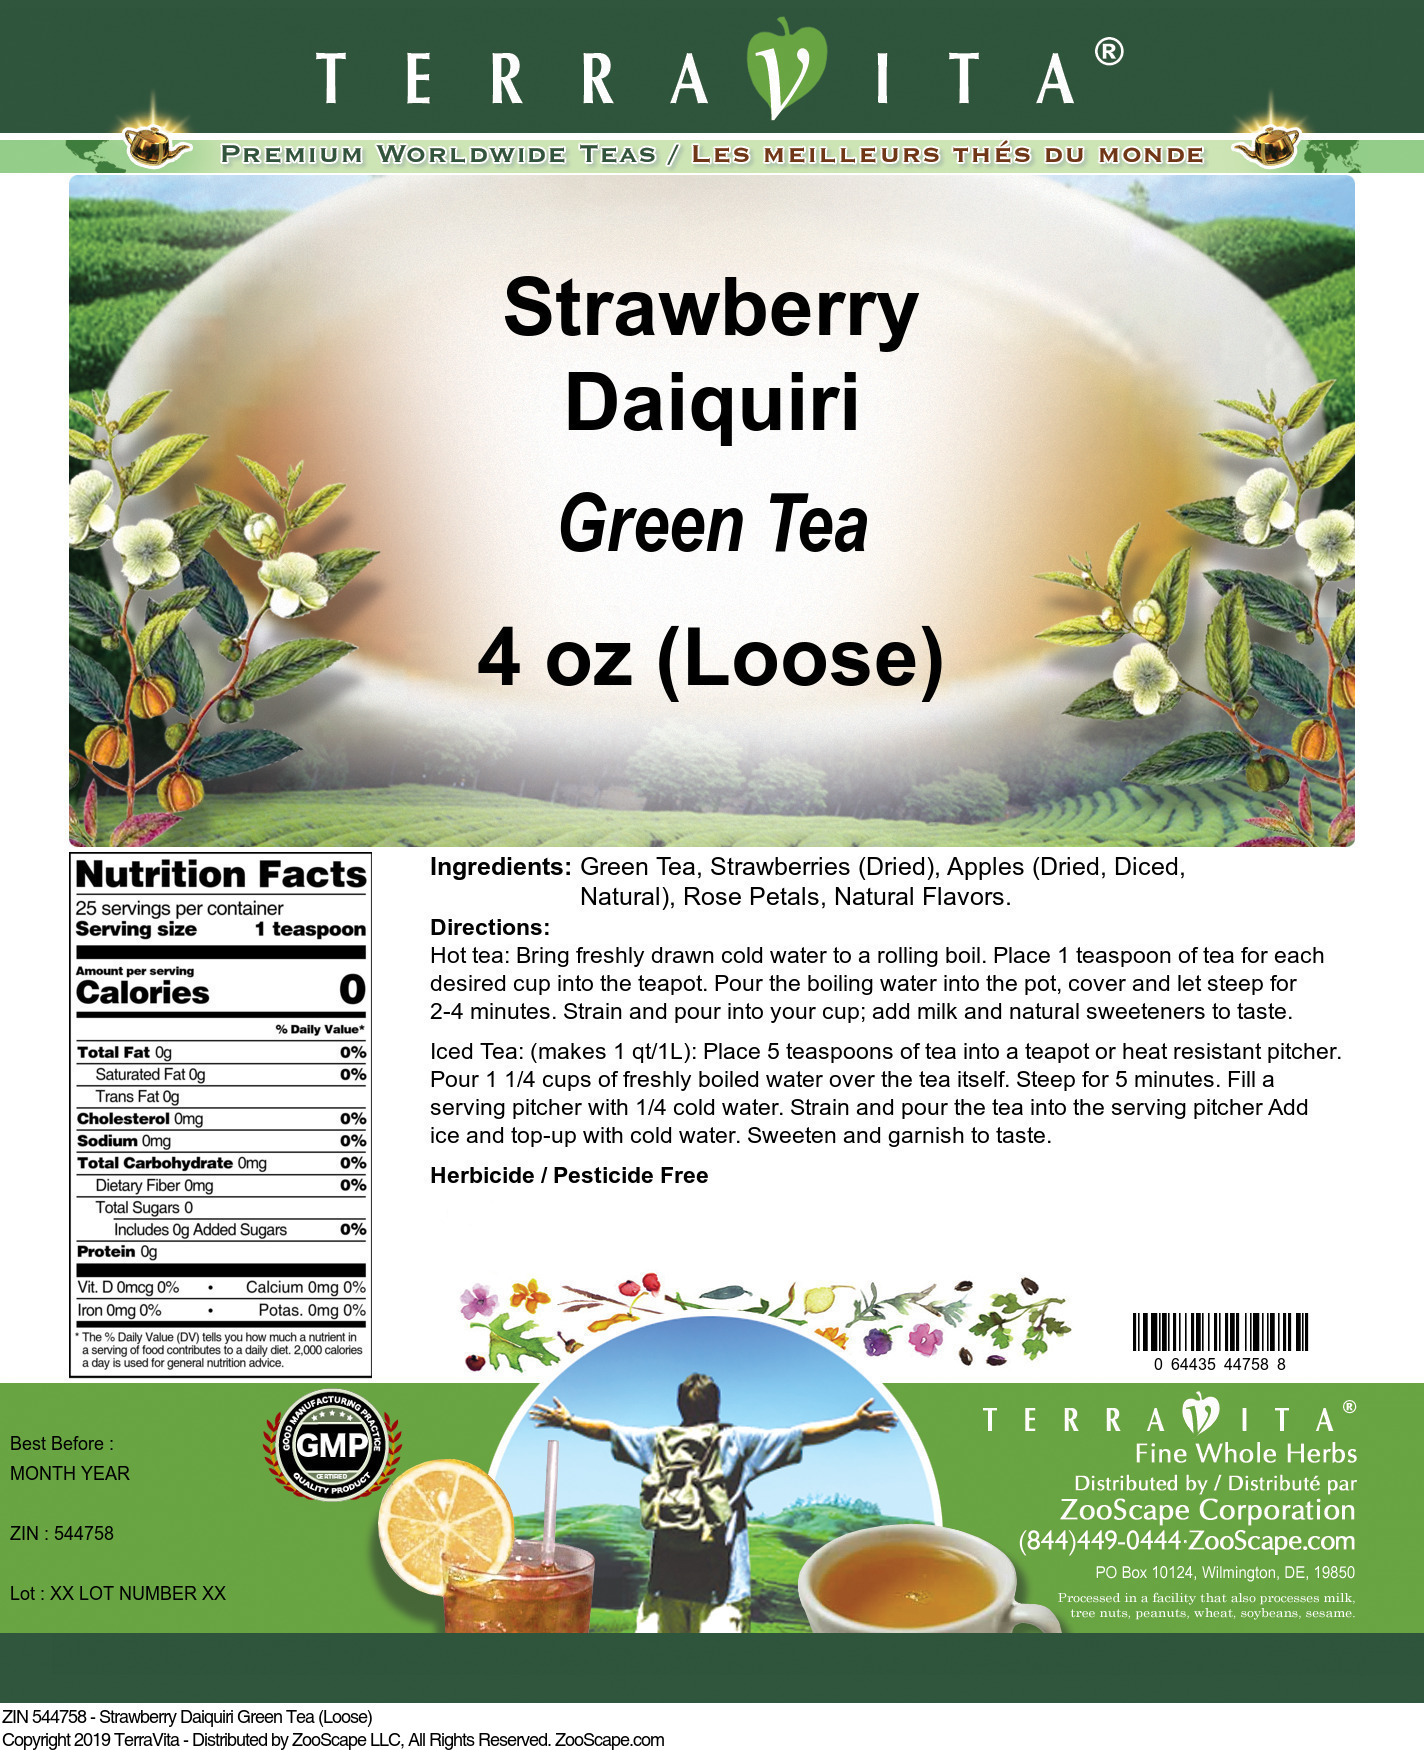 Strawberry Daiquiri Green Tea (Loose) - Label